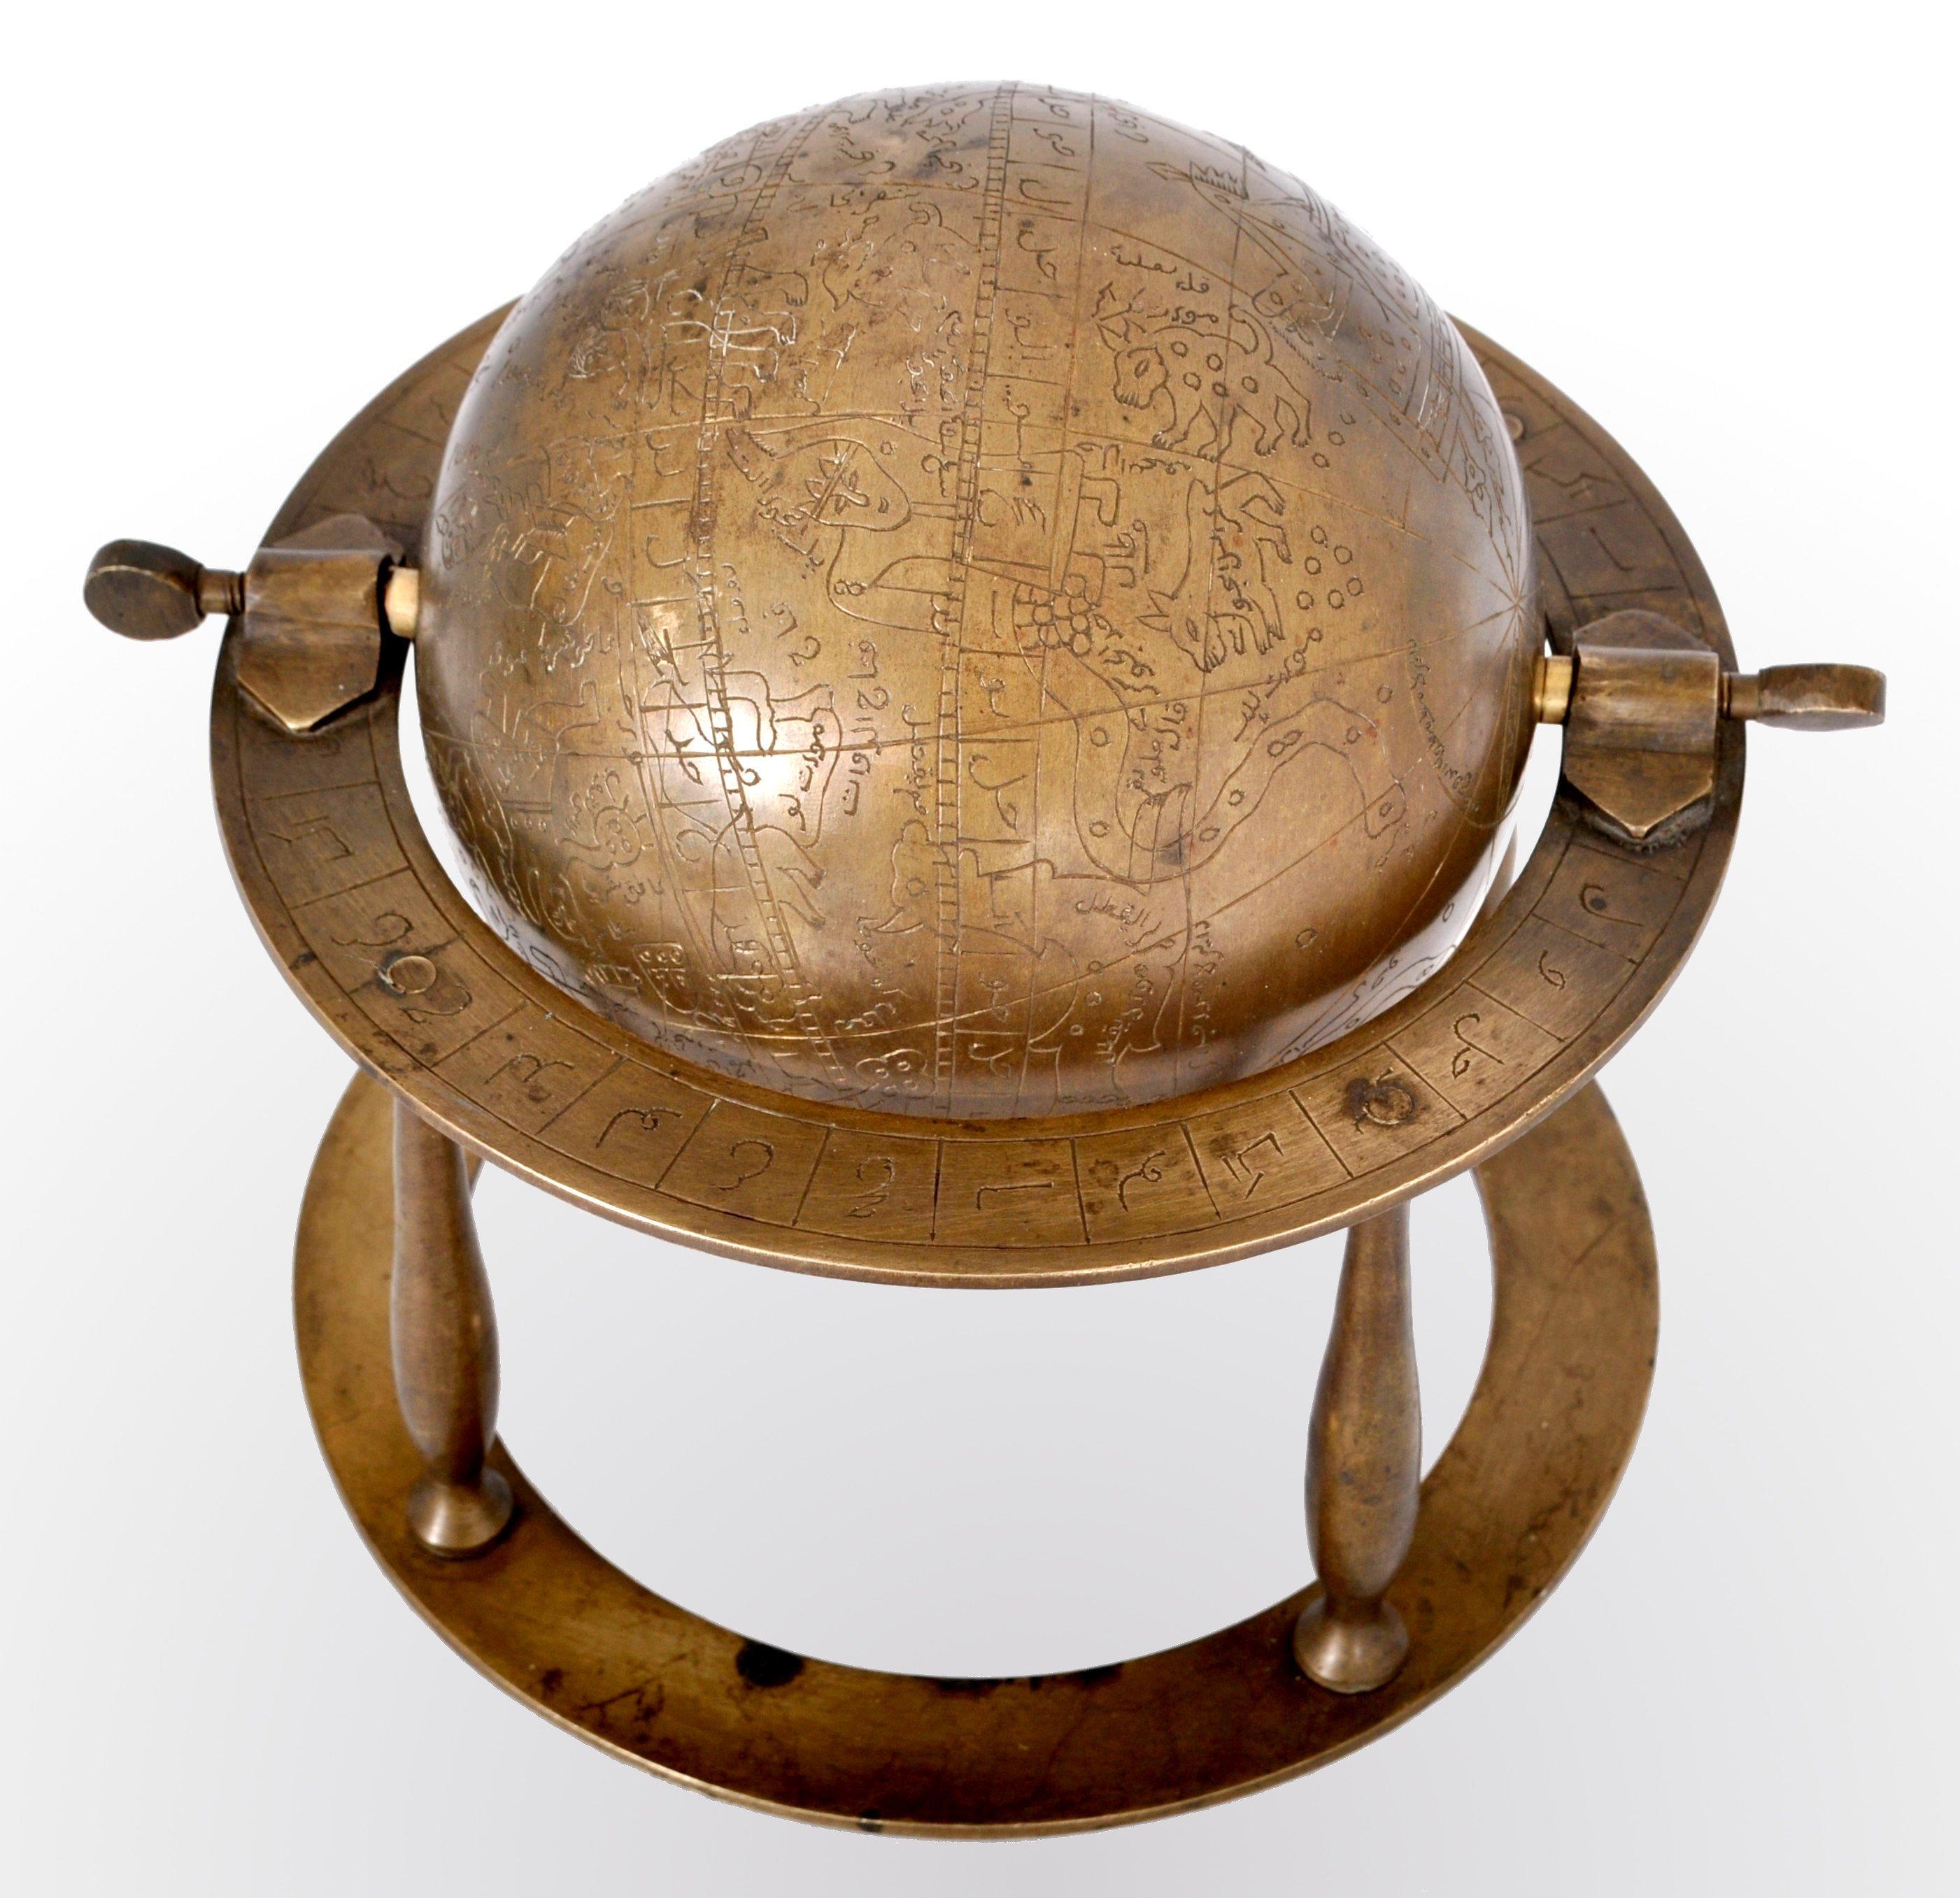 Engraved Antique 19th Century Islamic Arabic Bronze Celestial Globe Astrolabe